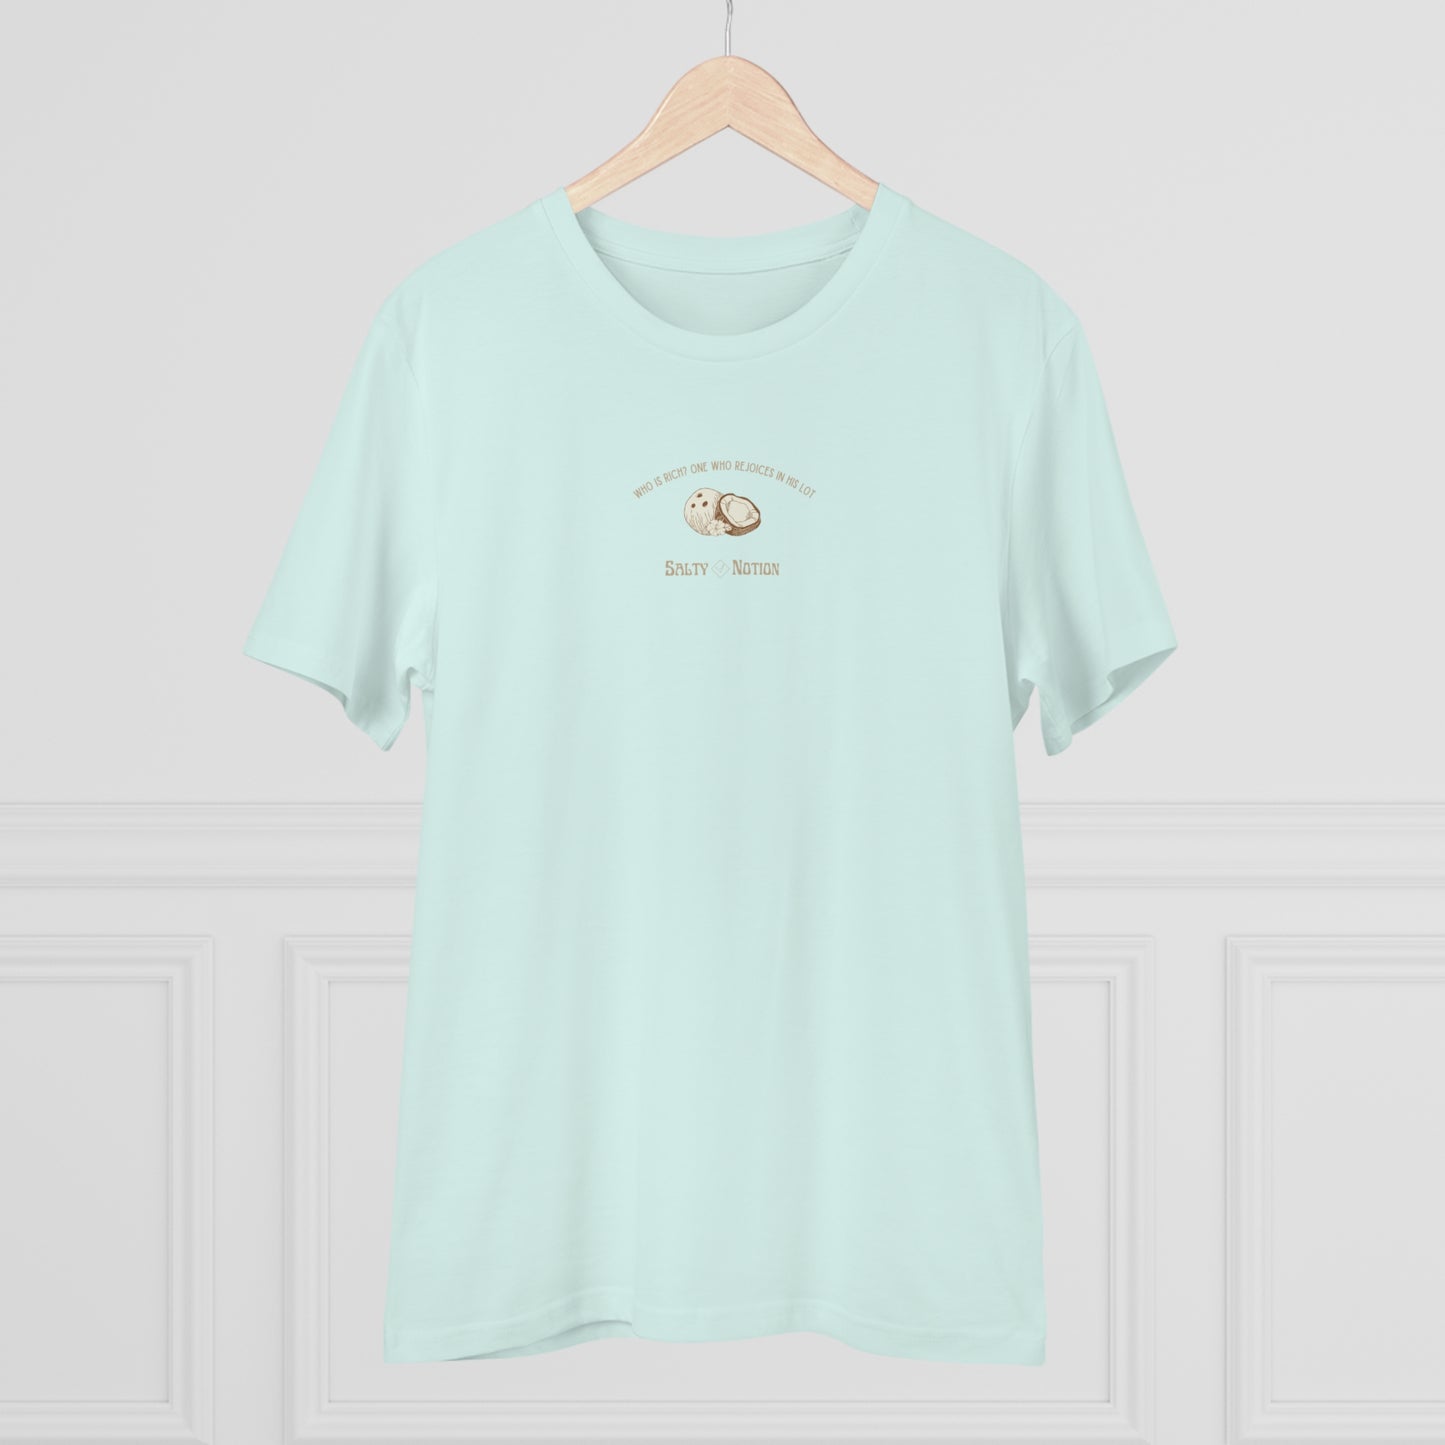 Organic "Rich" T-shirt Caribbean Blue - Unisex